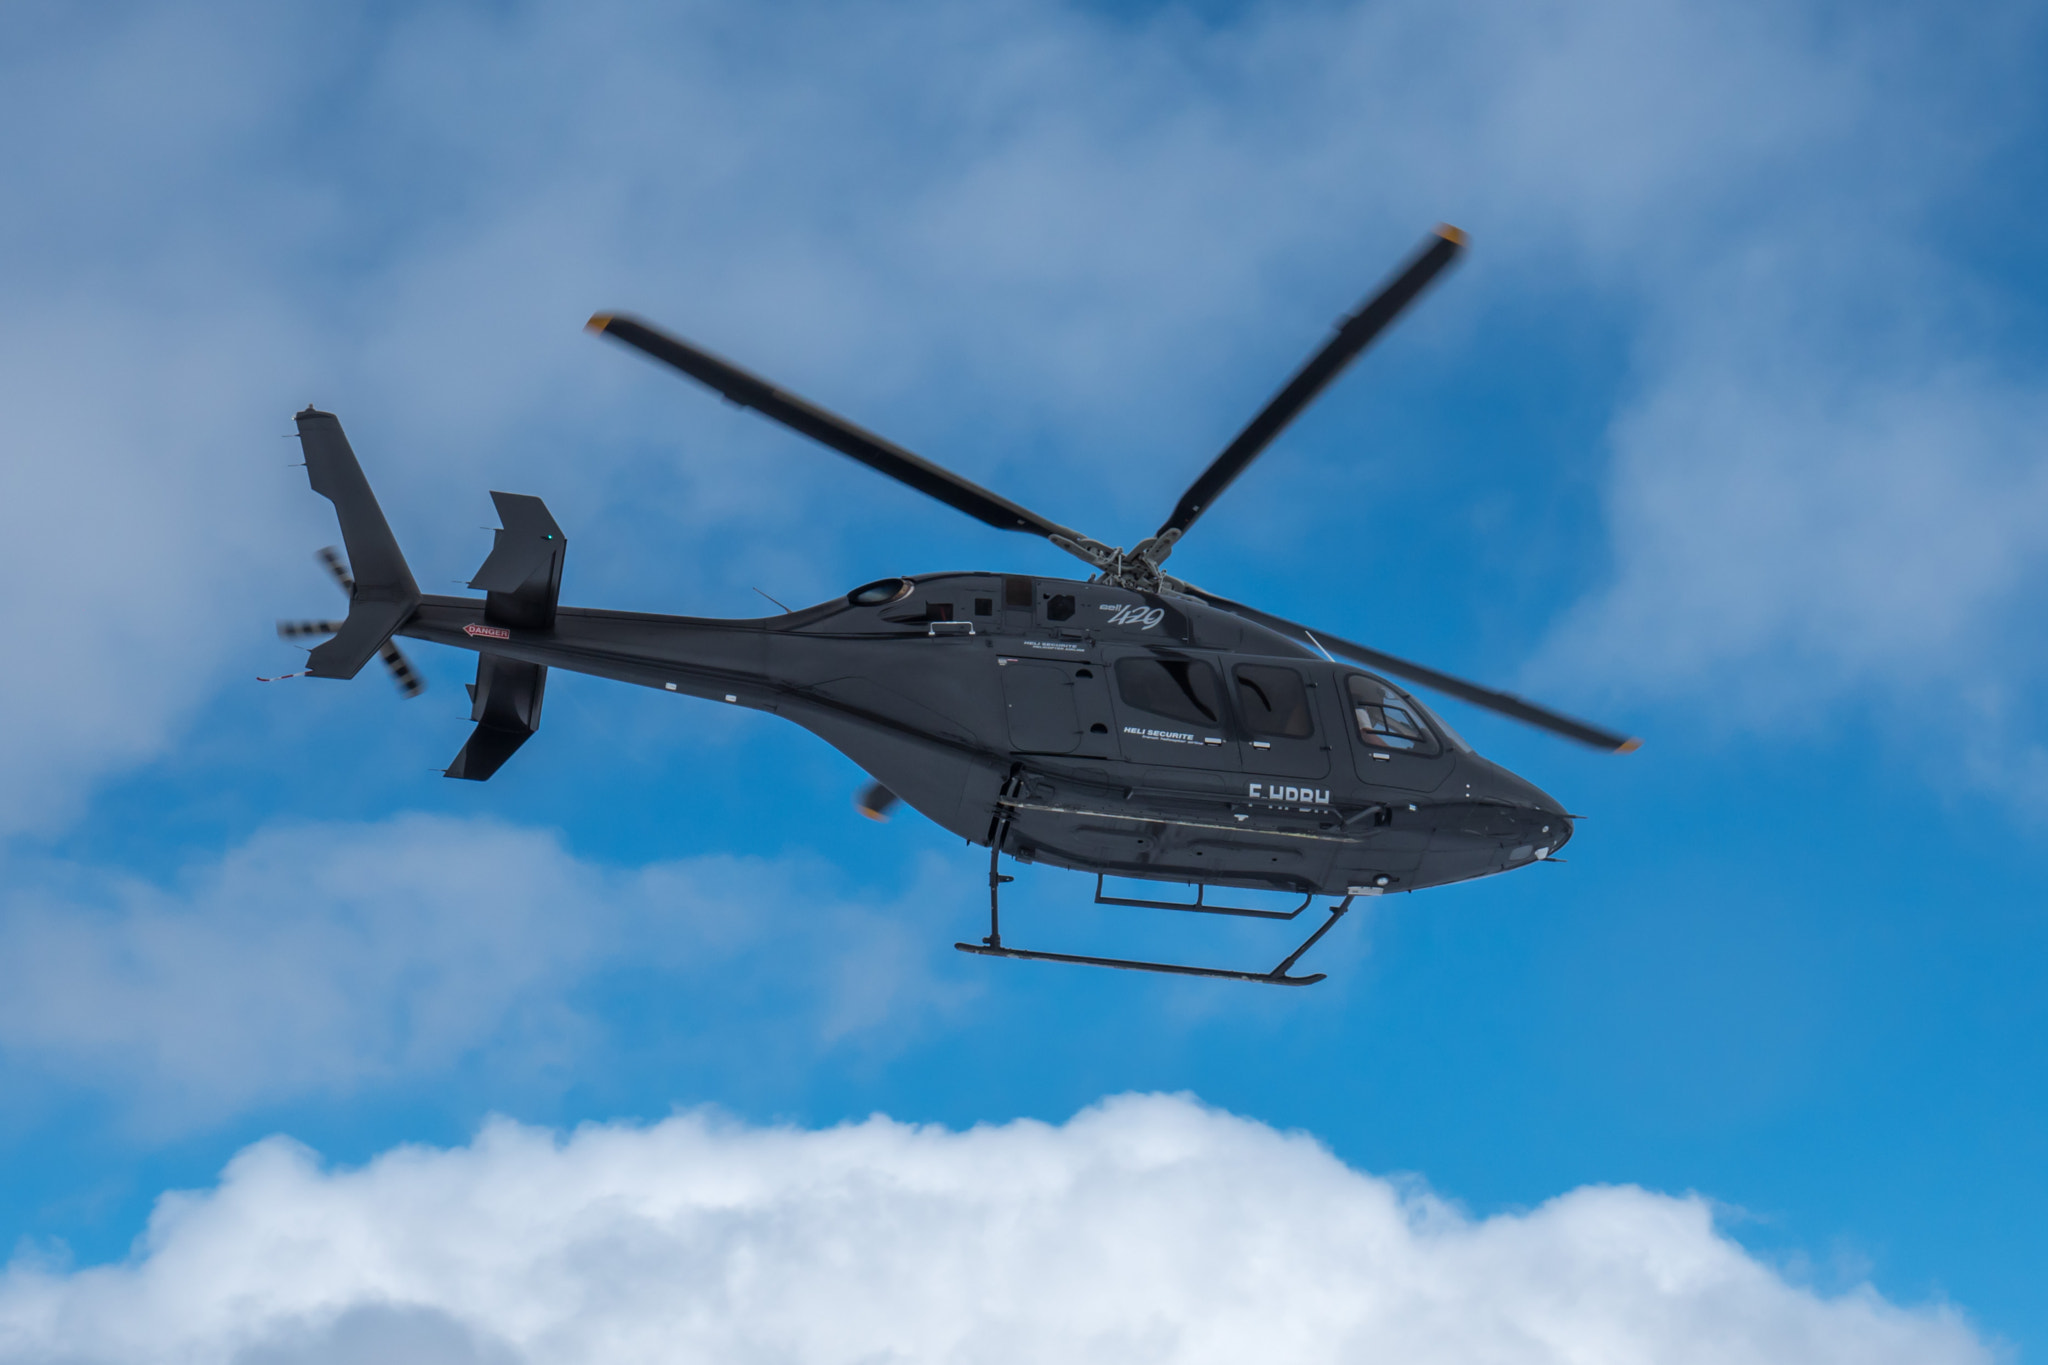 Panasonic Lumix DMC-GH4 sample photo. Bell 429 héli sécurité at courchevel photography